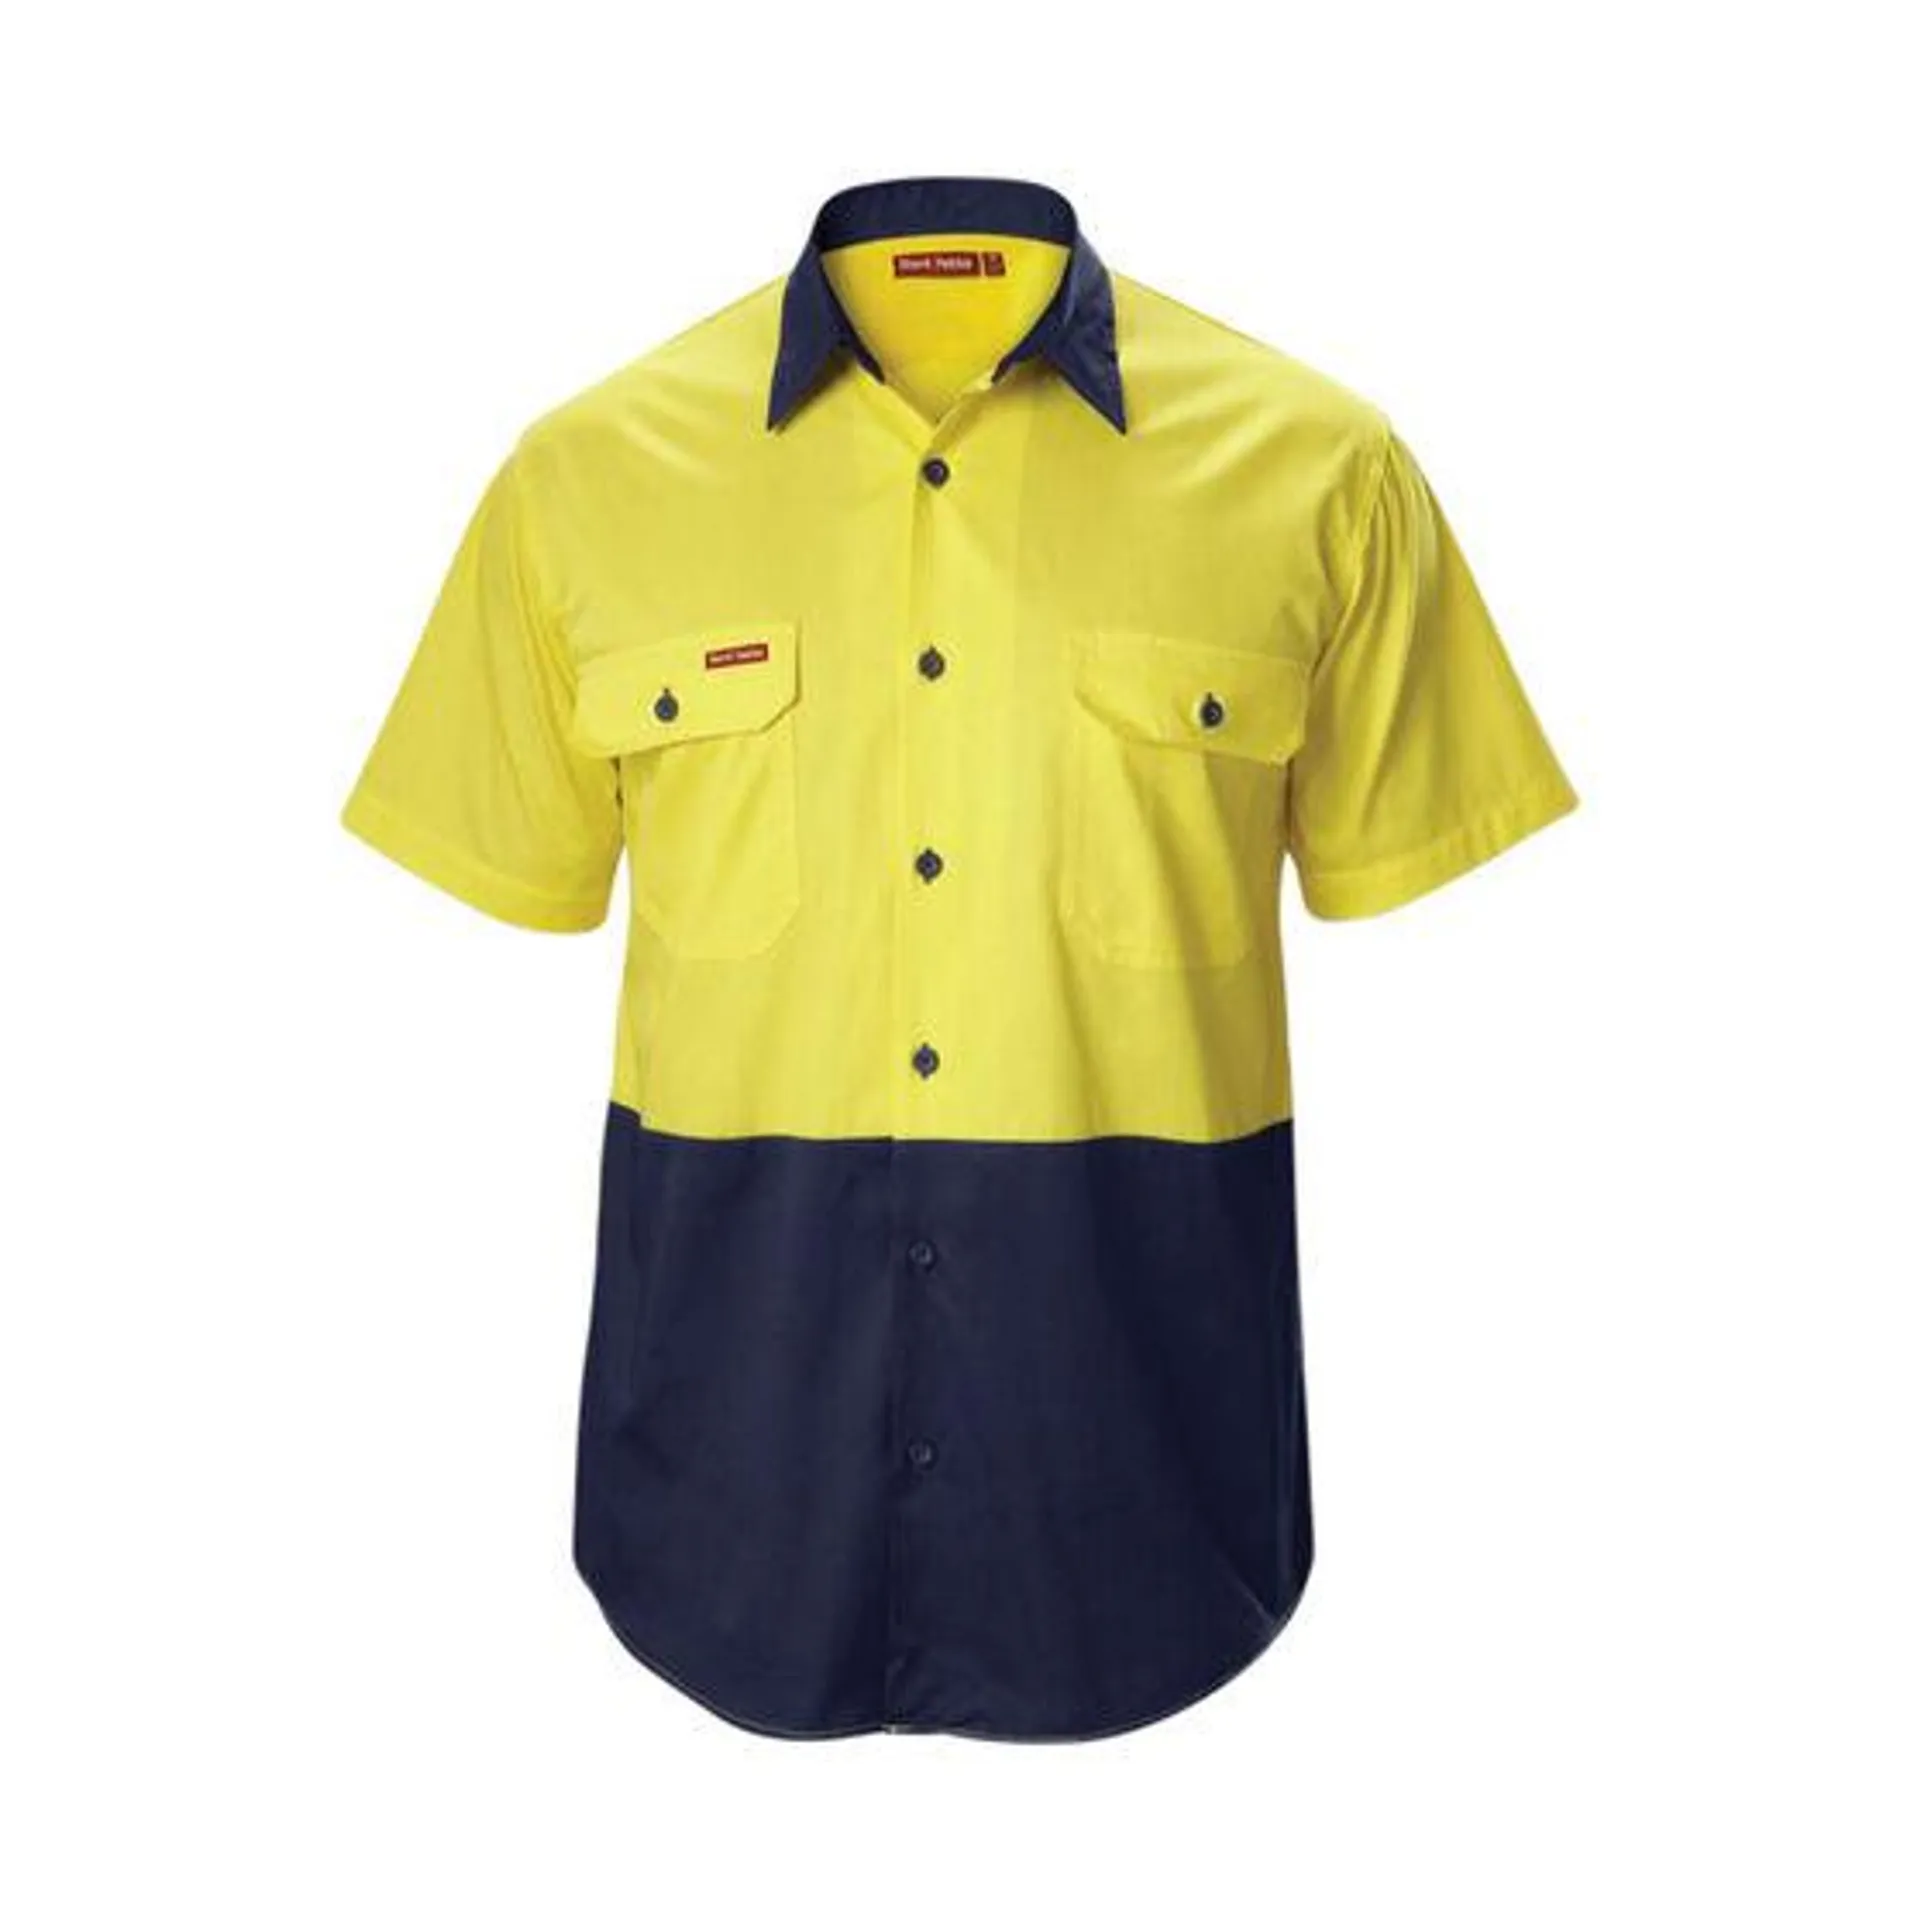 Hard Yakka Koolgear Hi Vis 2Tone Vented Short-Sleeved Yellow/Navy